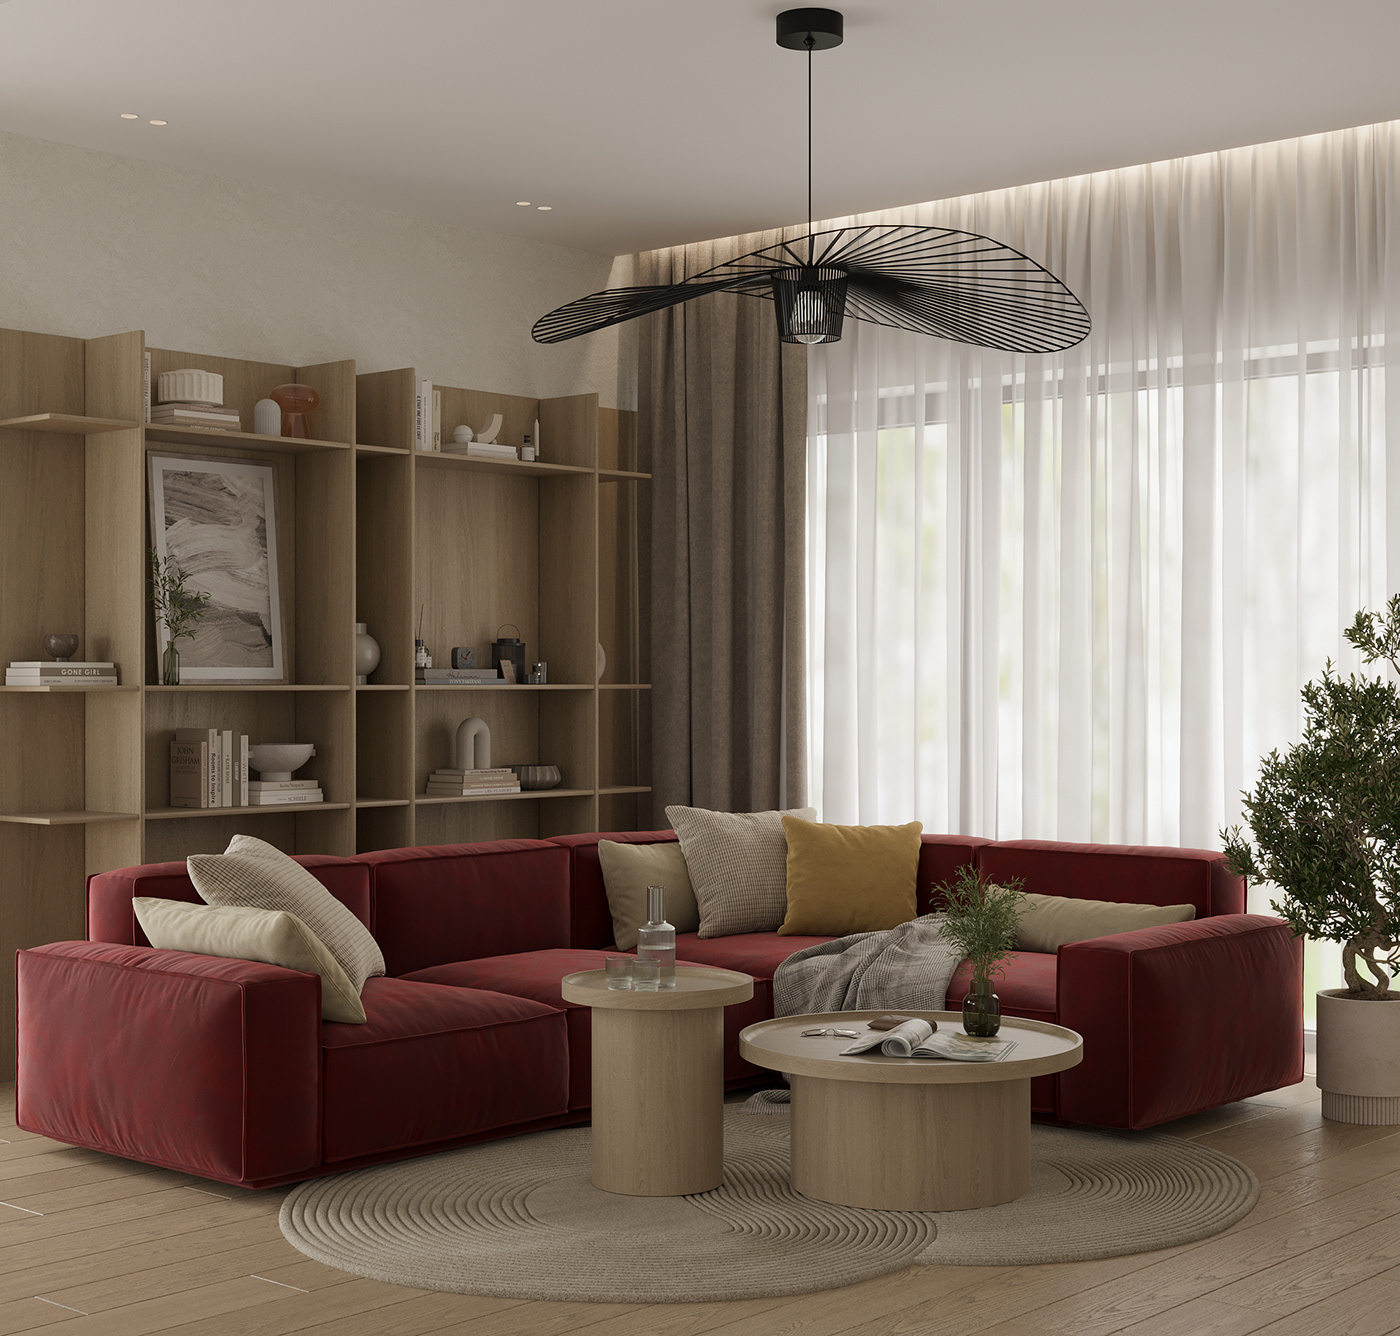 3ds max architecture home interior design  interiors Japandi interior projektowanie wnetrz  Render visualization wnętrza